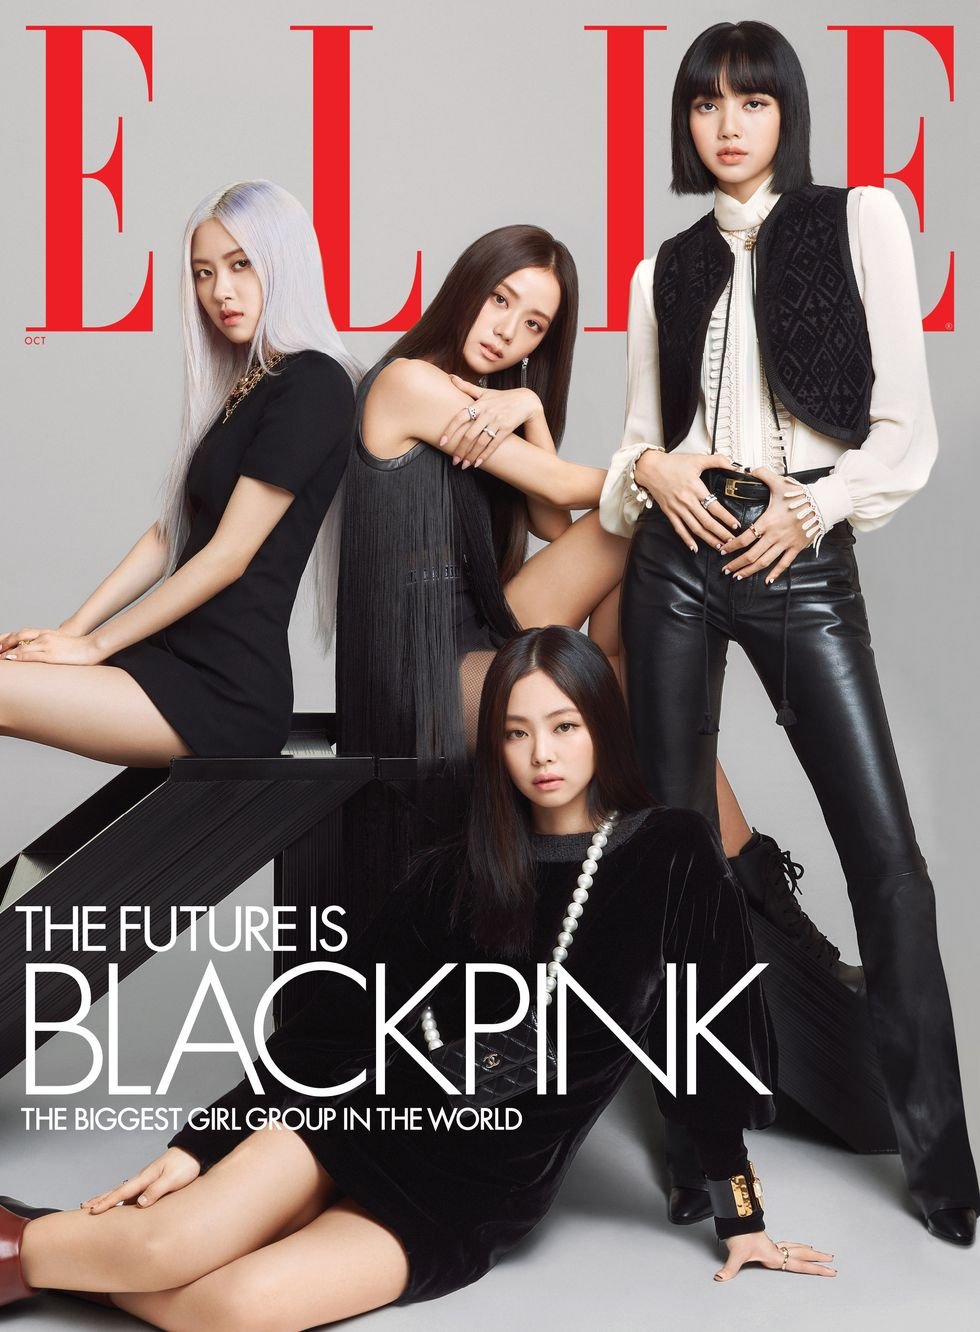 Blackpink for Elle US Cover October 2020 Issue